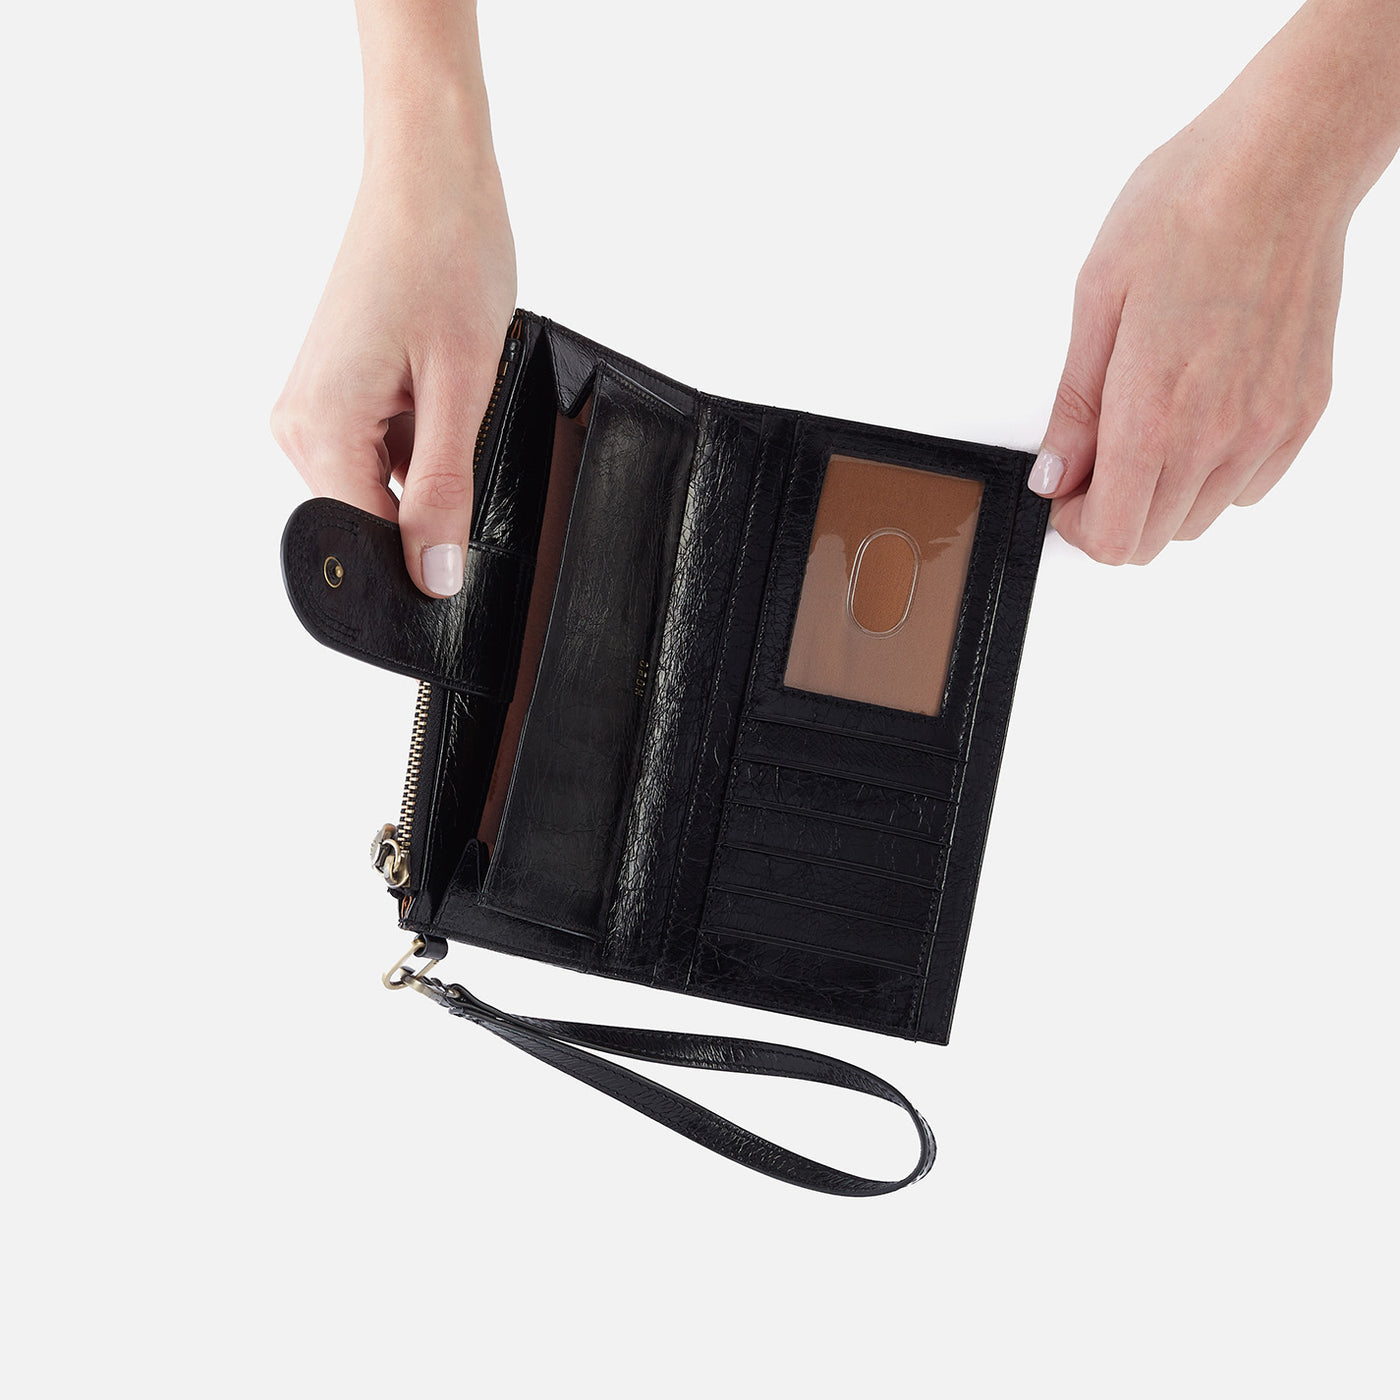 Kali Phone Wallet in Polished Leather - Black